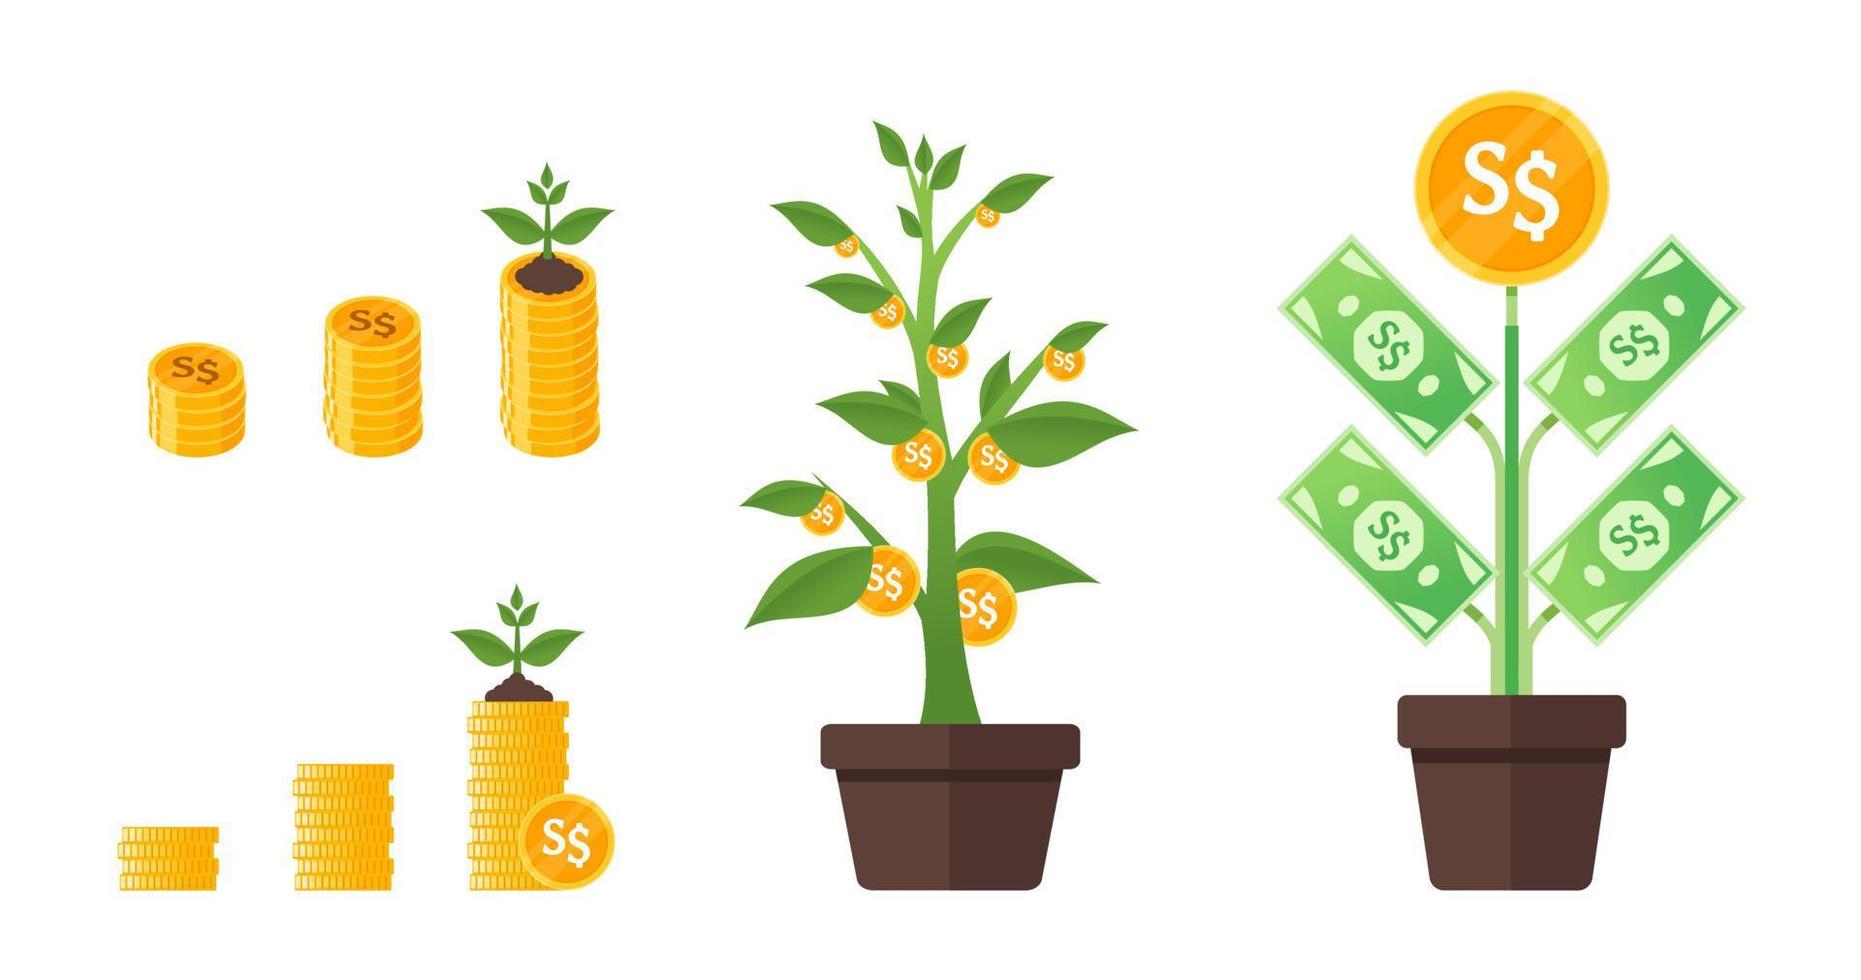 Singapore Dollar Money Tree Growing vector